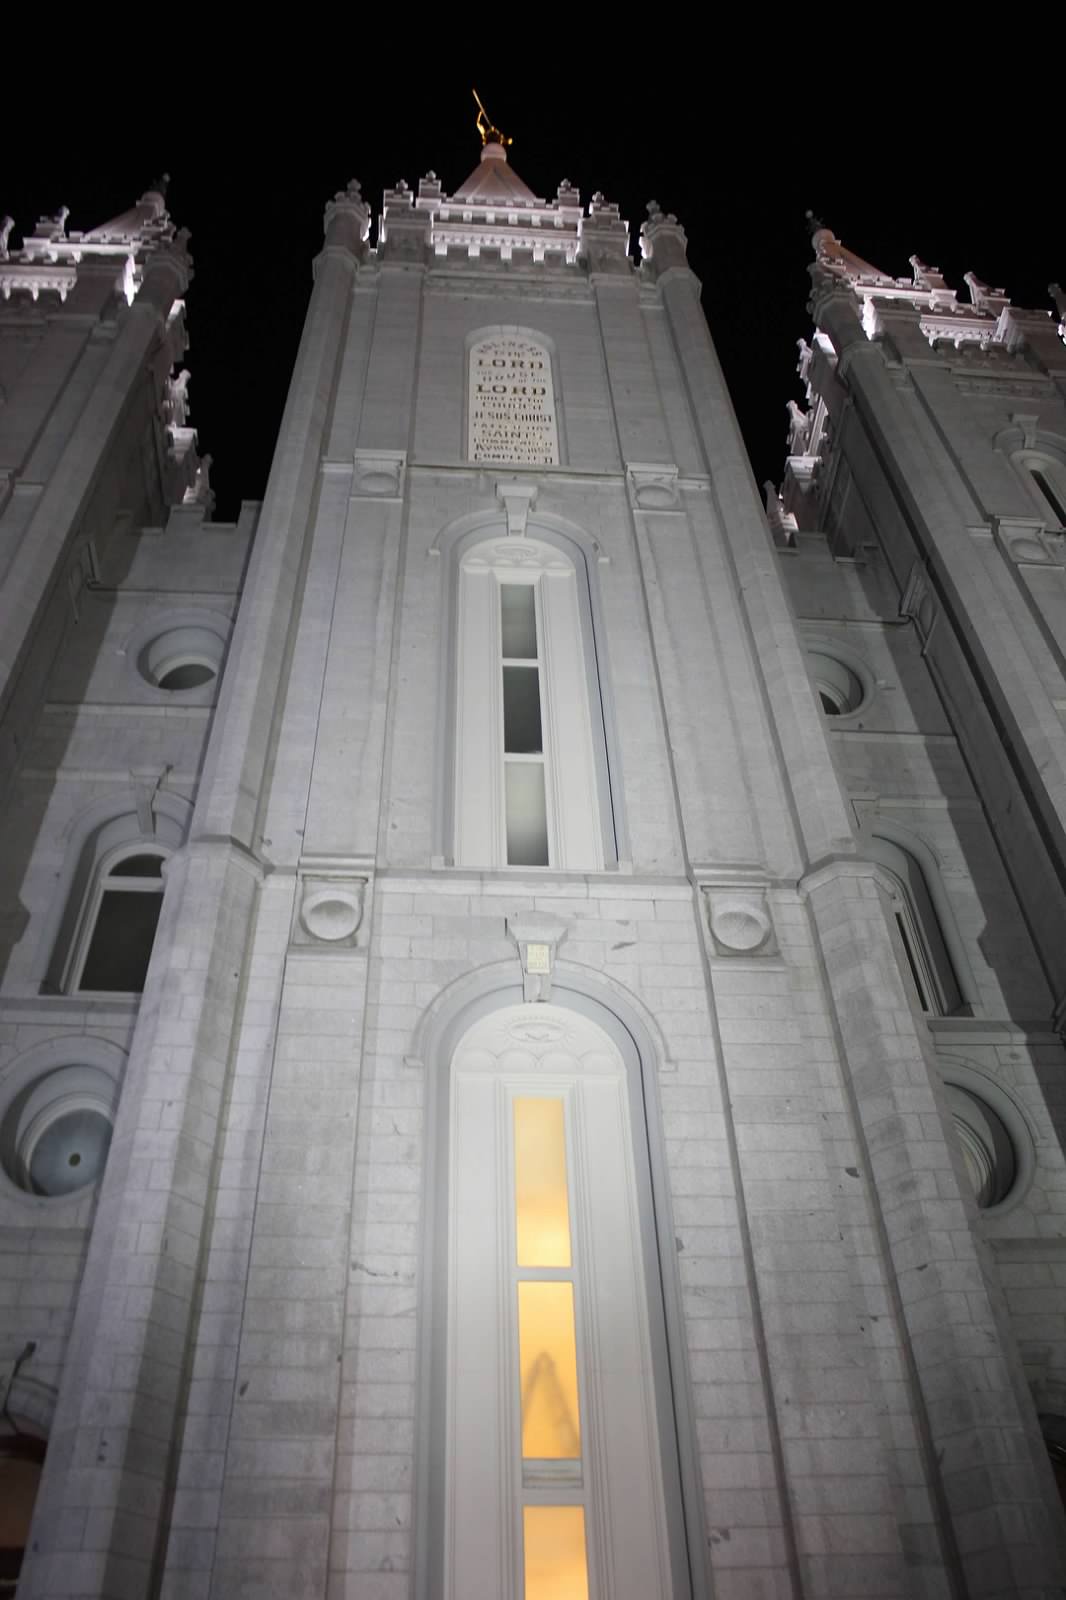 the façade of the Salt Lake City Mormon temple at night.